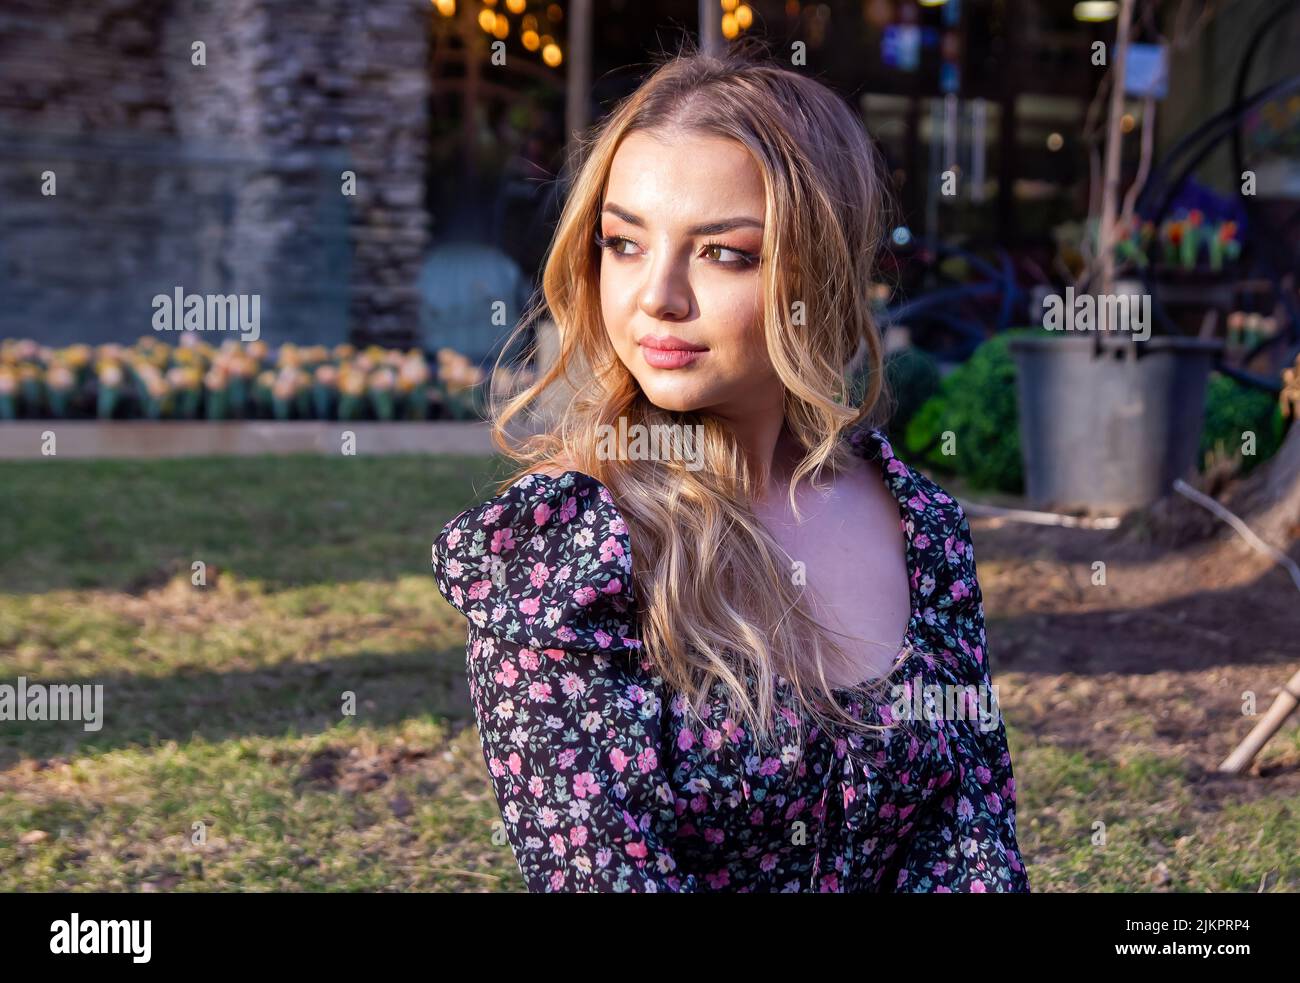 A beautiful young caucasian woman wearing a floral dress posing outdoors Stock Photo